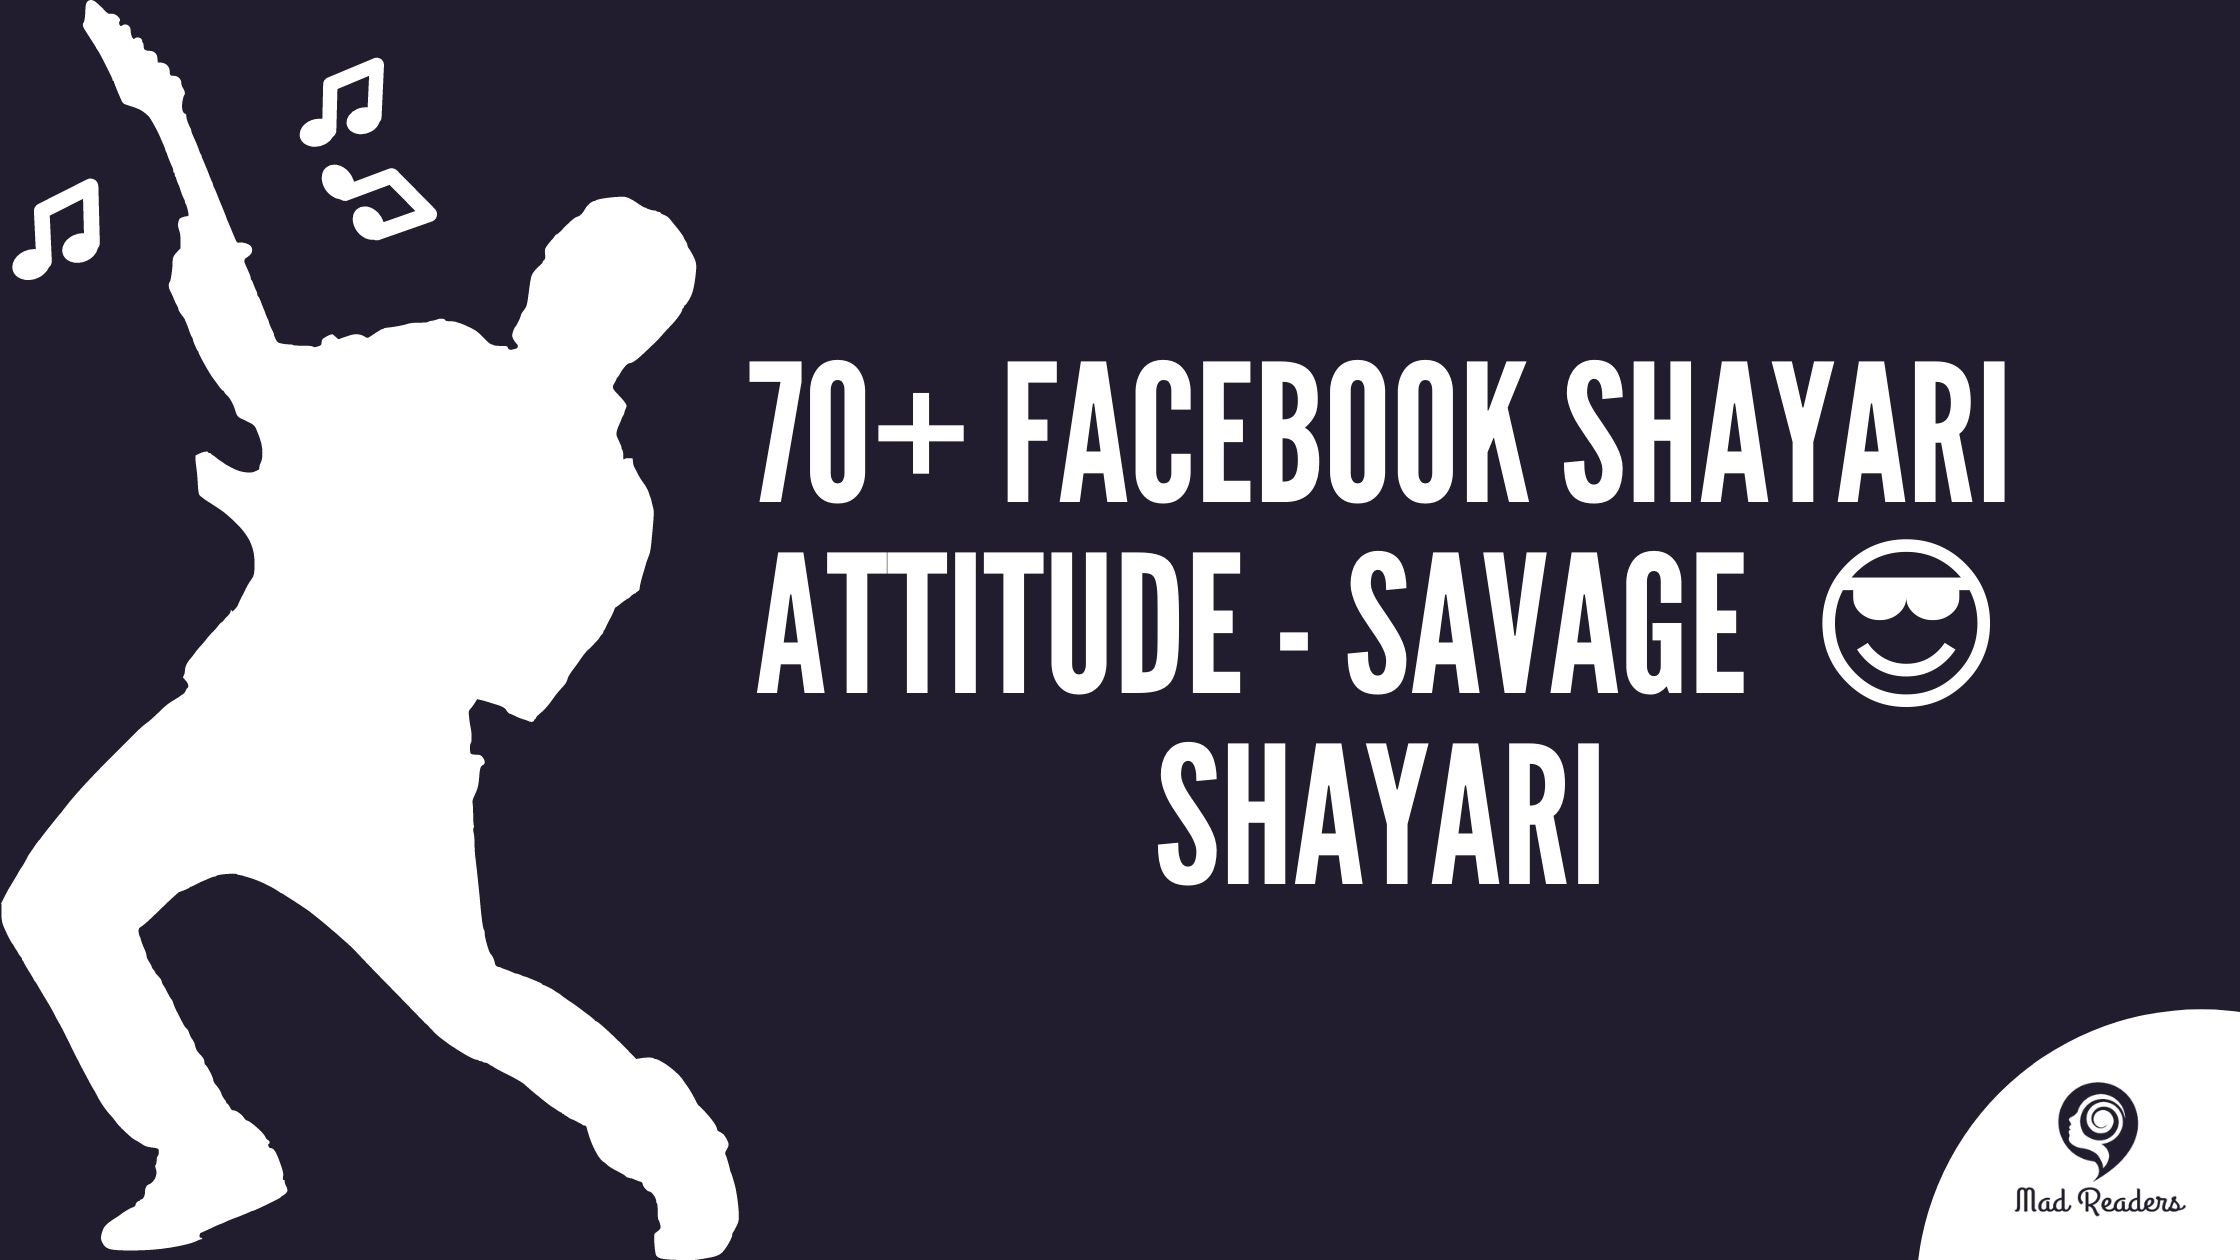 70+ Facebook Shayari Attitude - Savage ðŸ”¥ðŸ˜Ž Shayari